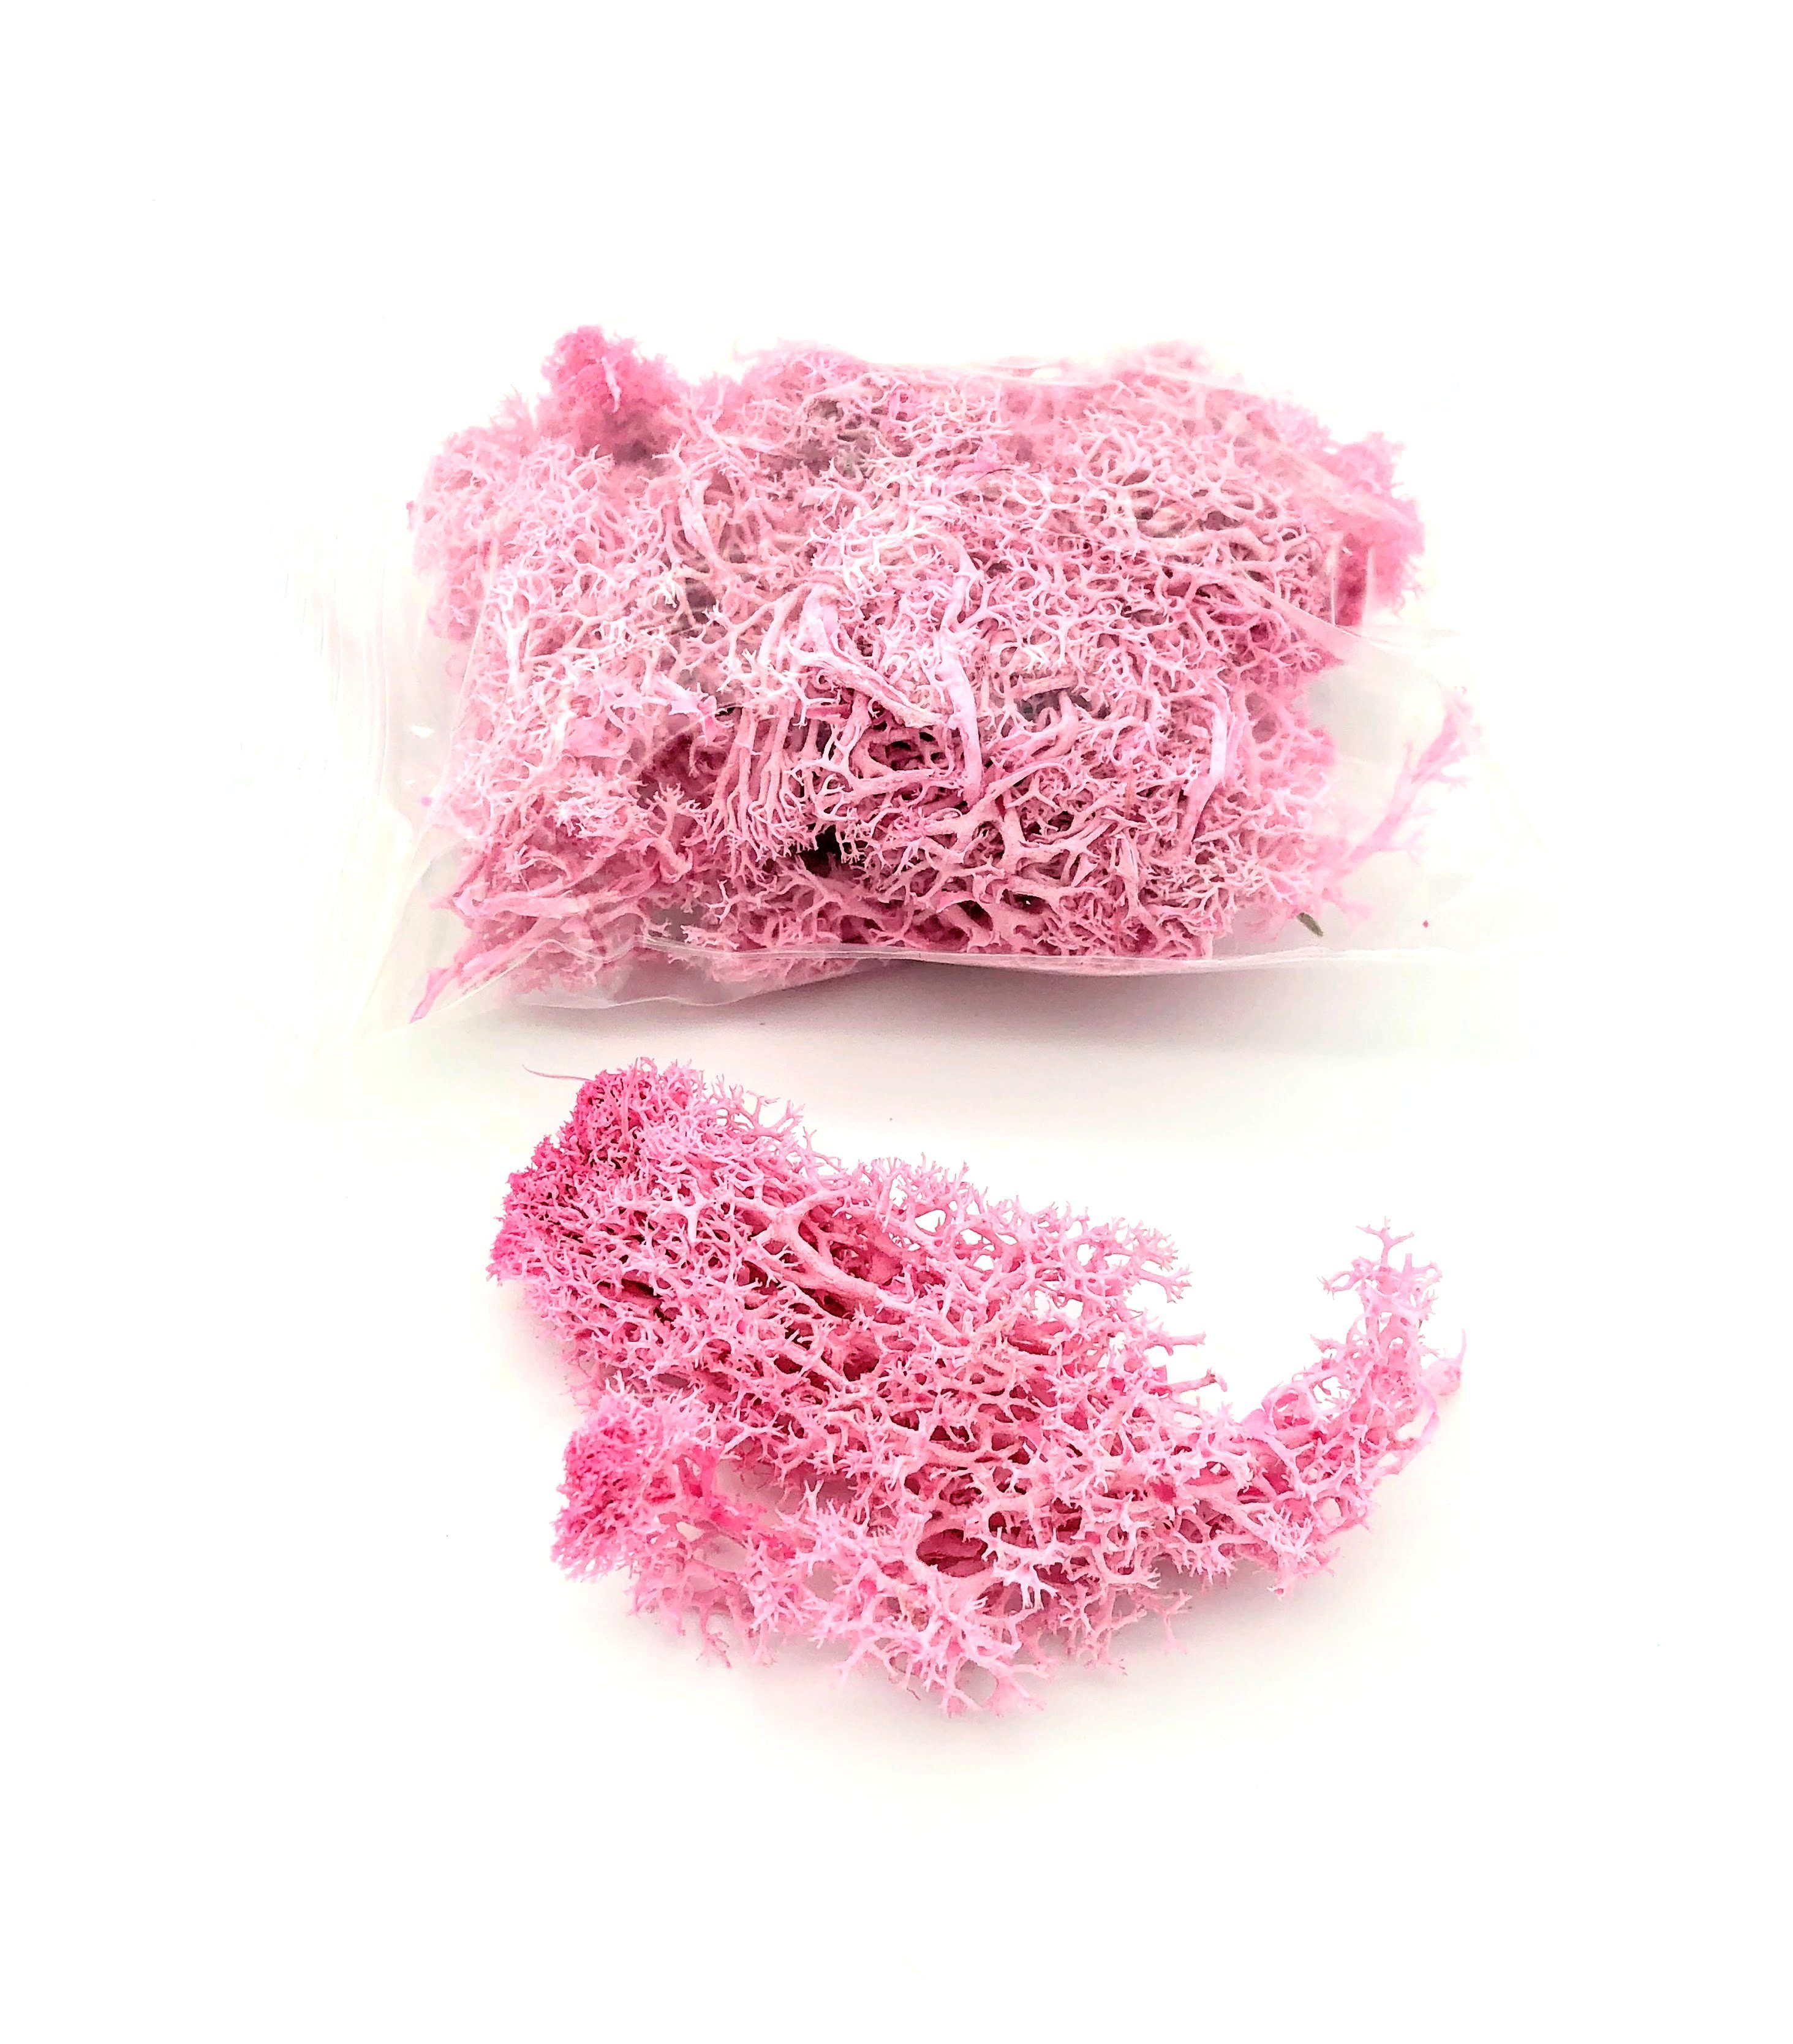 Trockenblume Getrocknetes Moos in verschiedenen Farben - Rosé, Kunstharz.Art